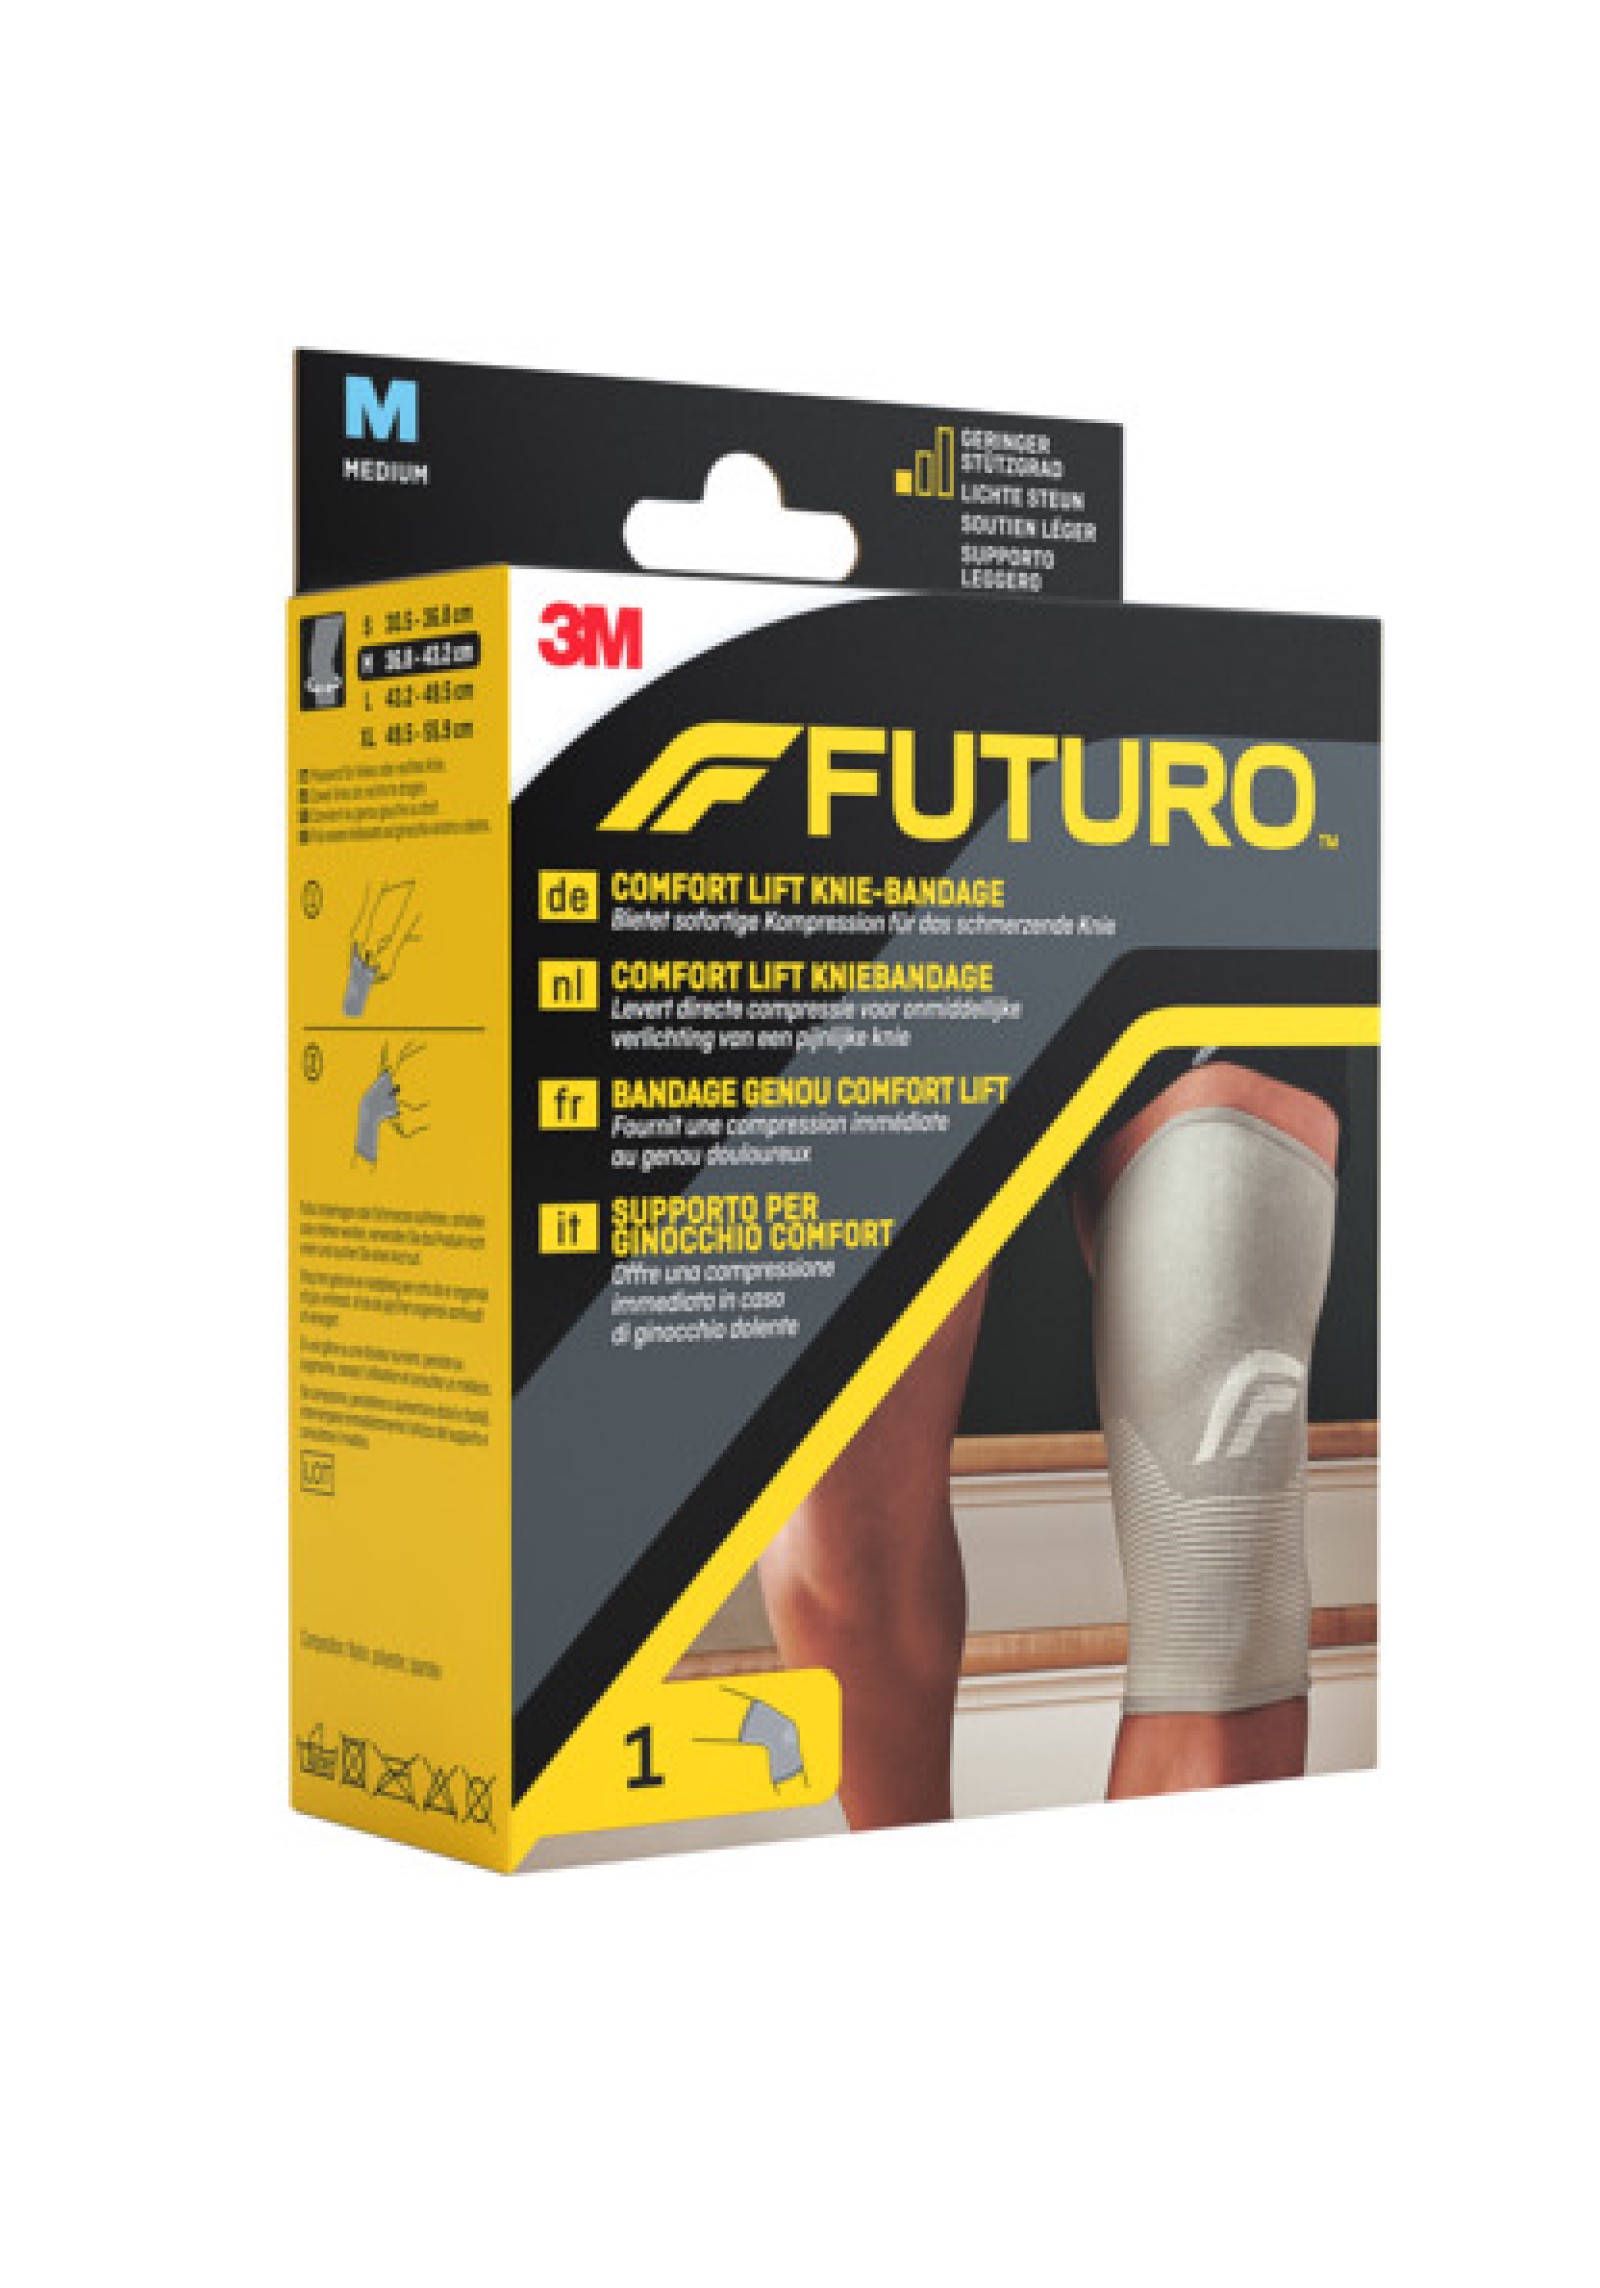 FUTURO™ Comfort Lift Knie-Bandage 76587, M (36.8 - 43.2 cm)